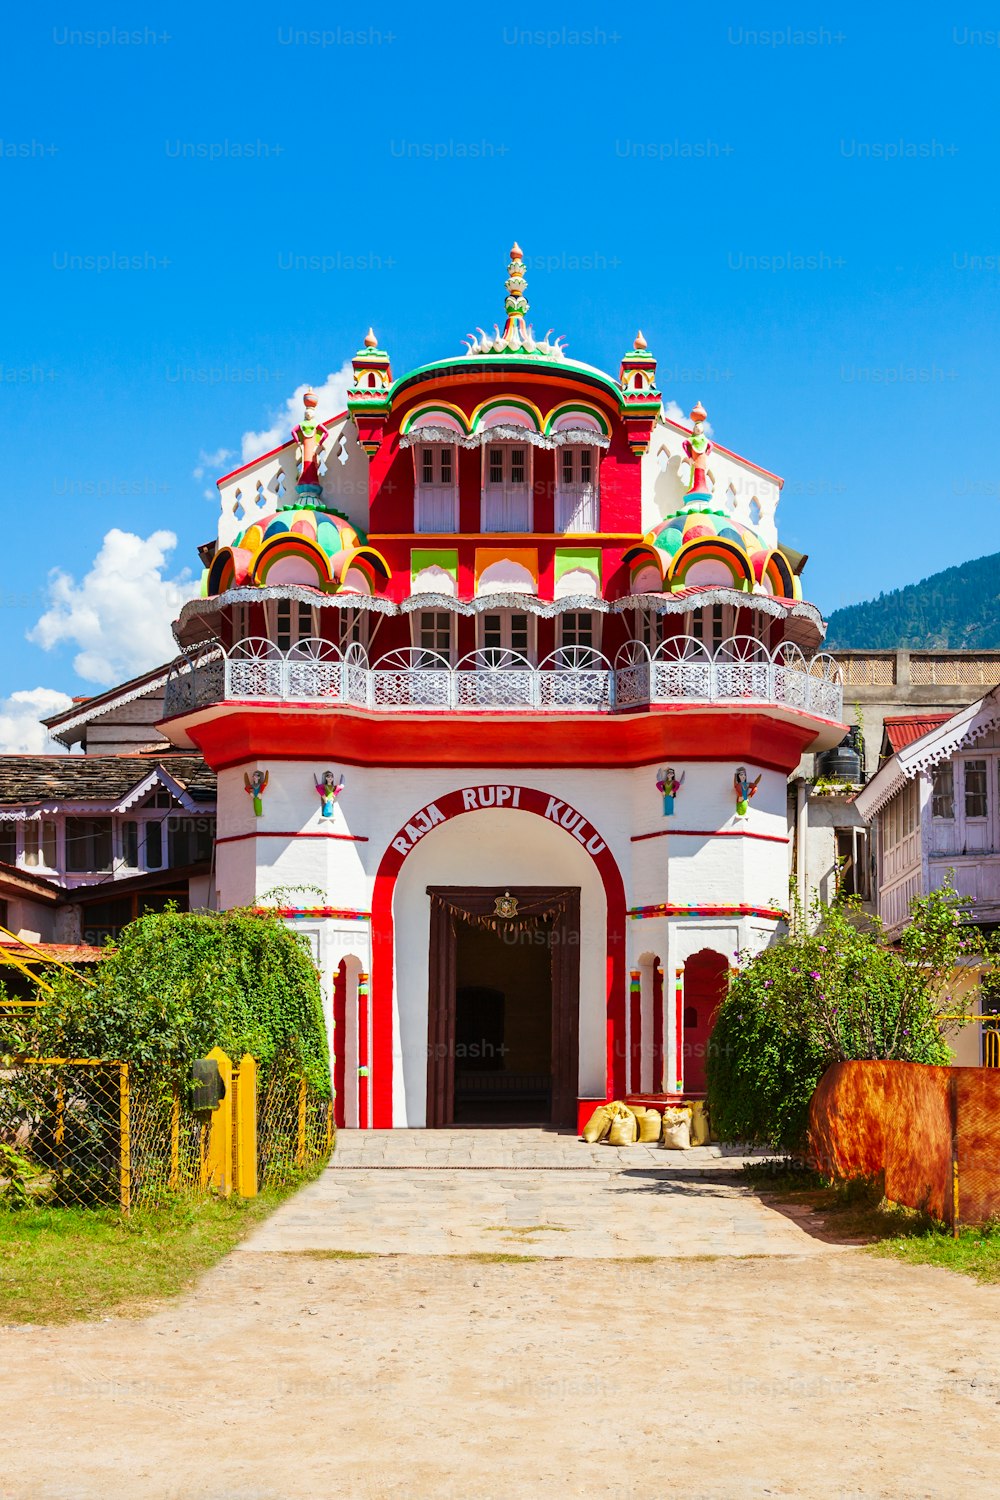 Raja Rupi Palace in Kullu town, Himachal Pradesh state in India